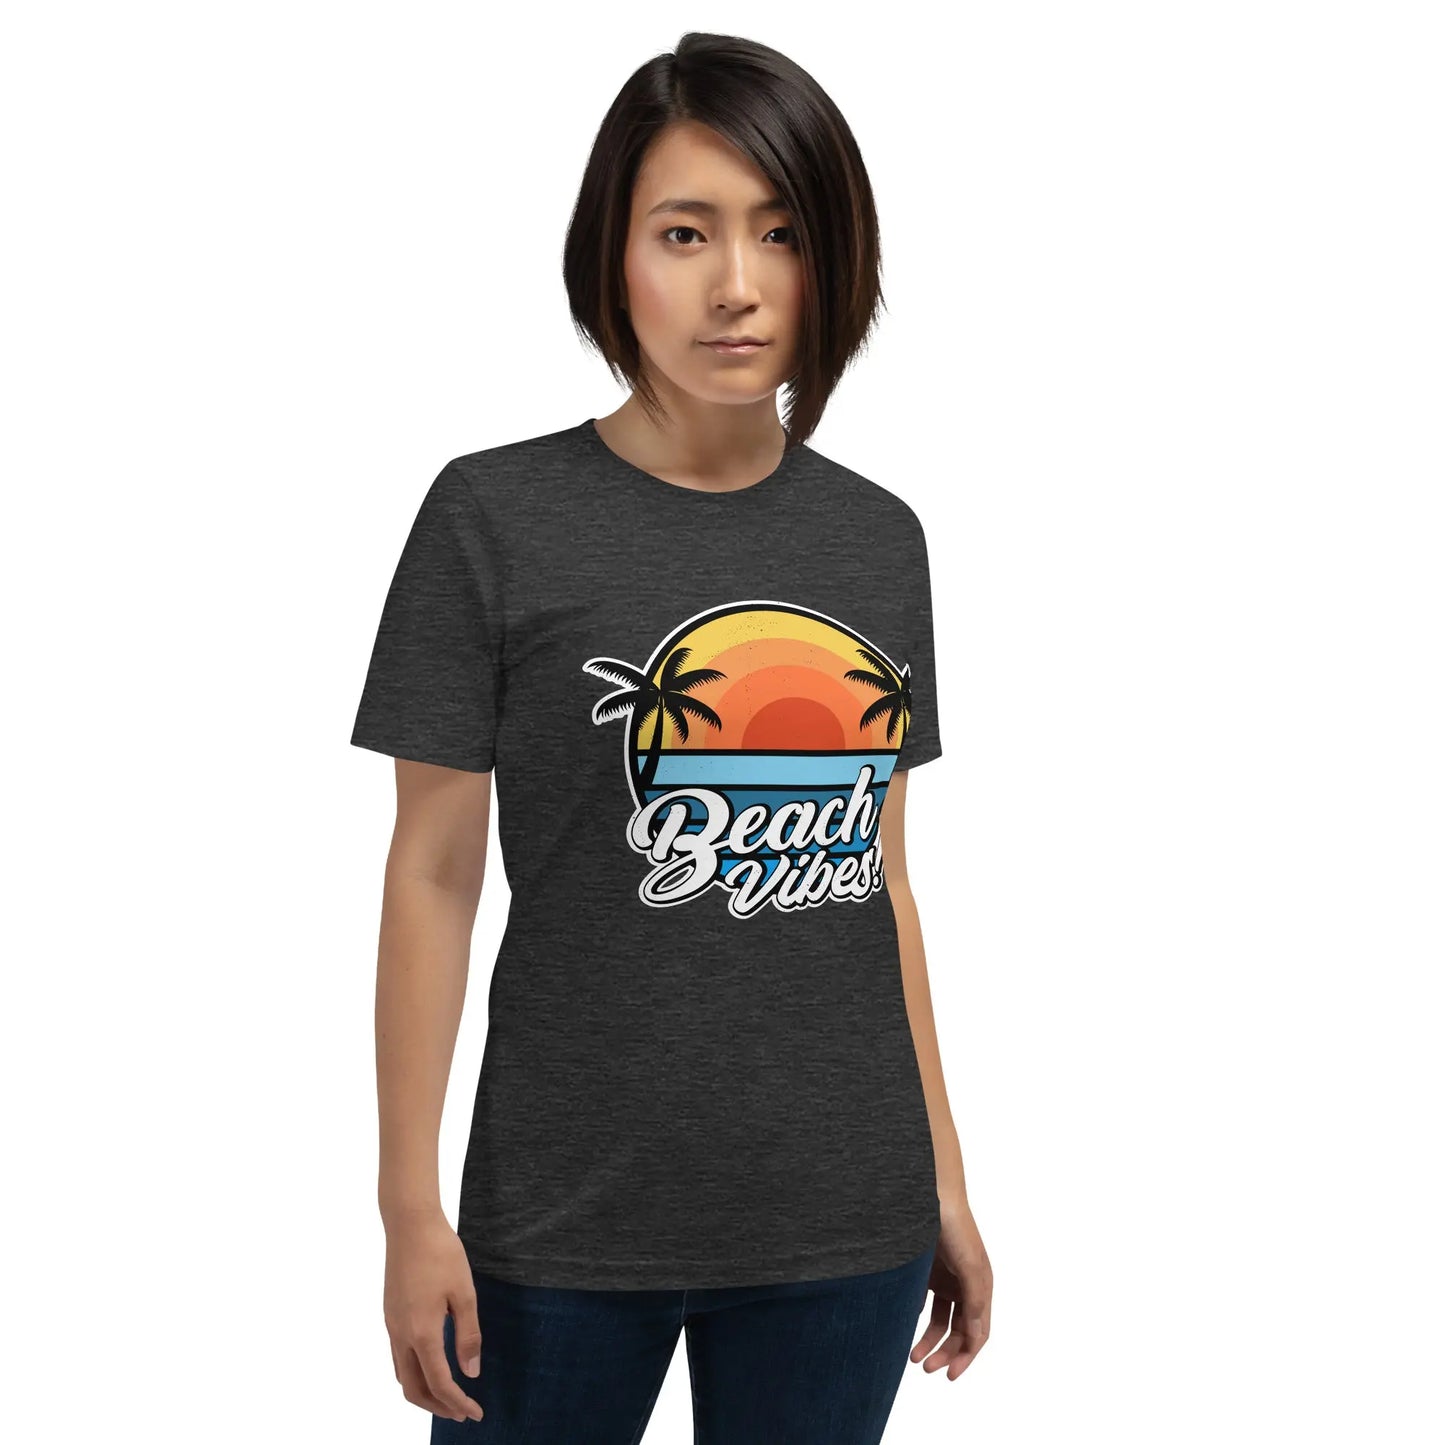 Beach Vibes with this Coastal Adult Unisex T-Shirt - Coastal Journeyz9496443_8495